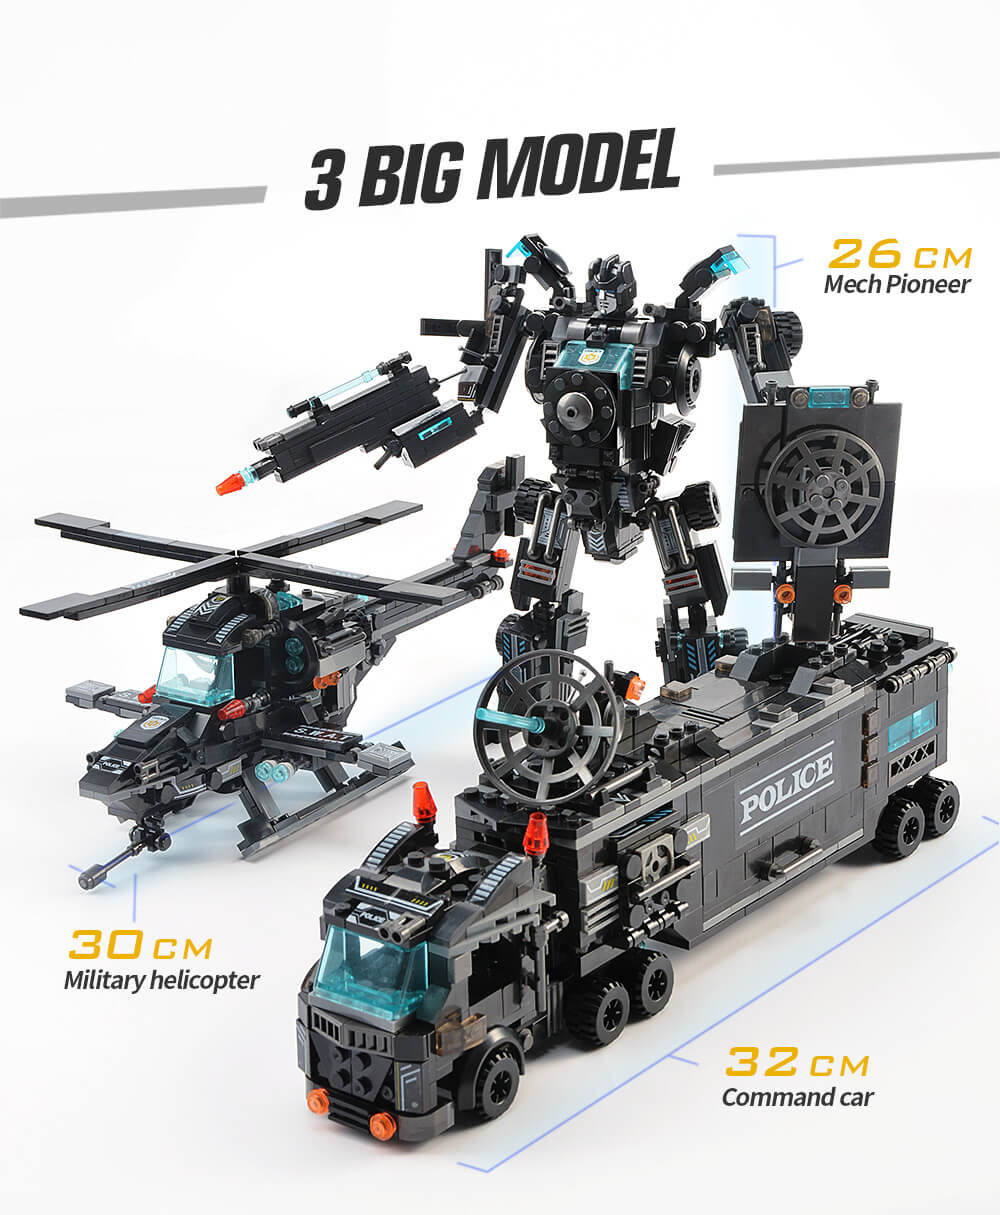 820PCS Building Blocks Robot City Police Toys Blocks Boys Vehicle Aircraft Educational Truck Blocks Compatible Model Bricks